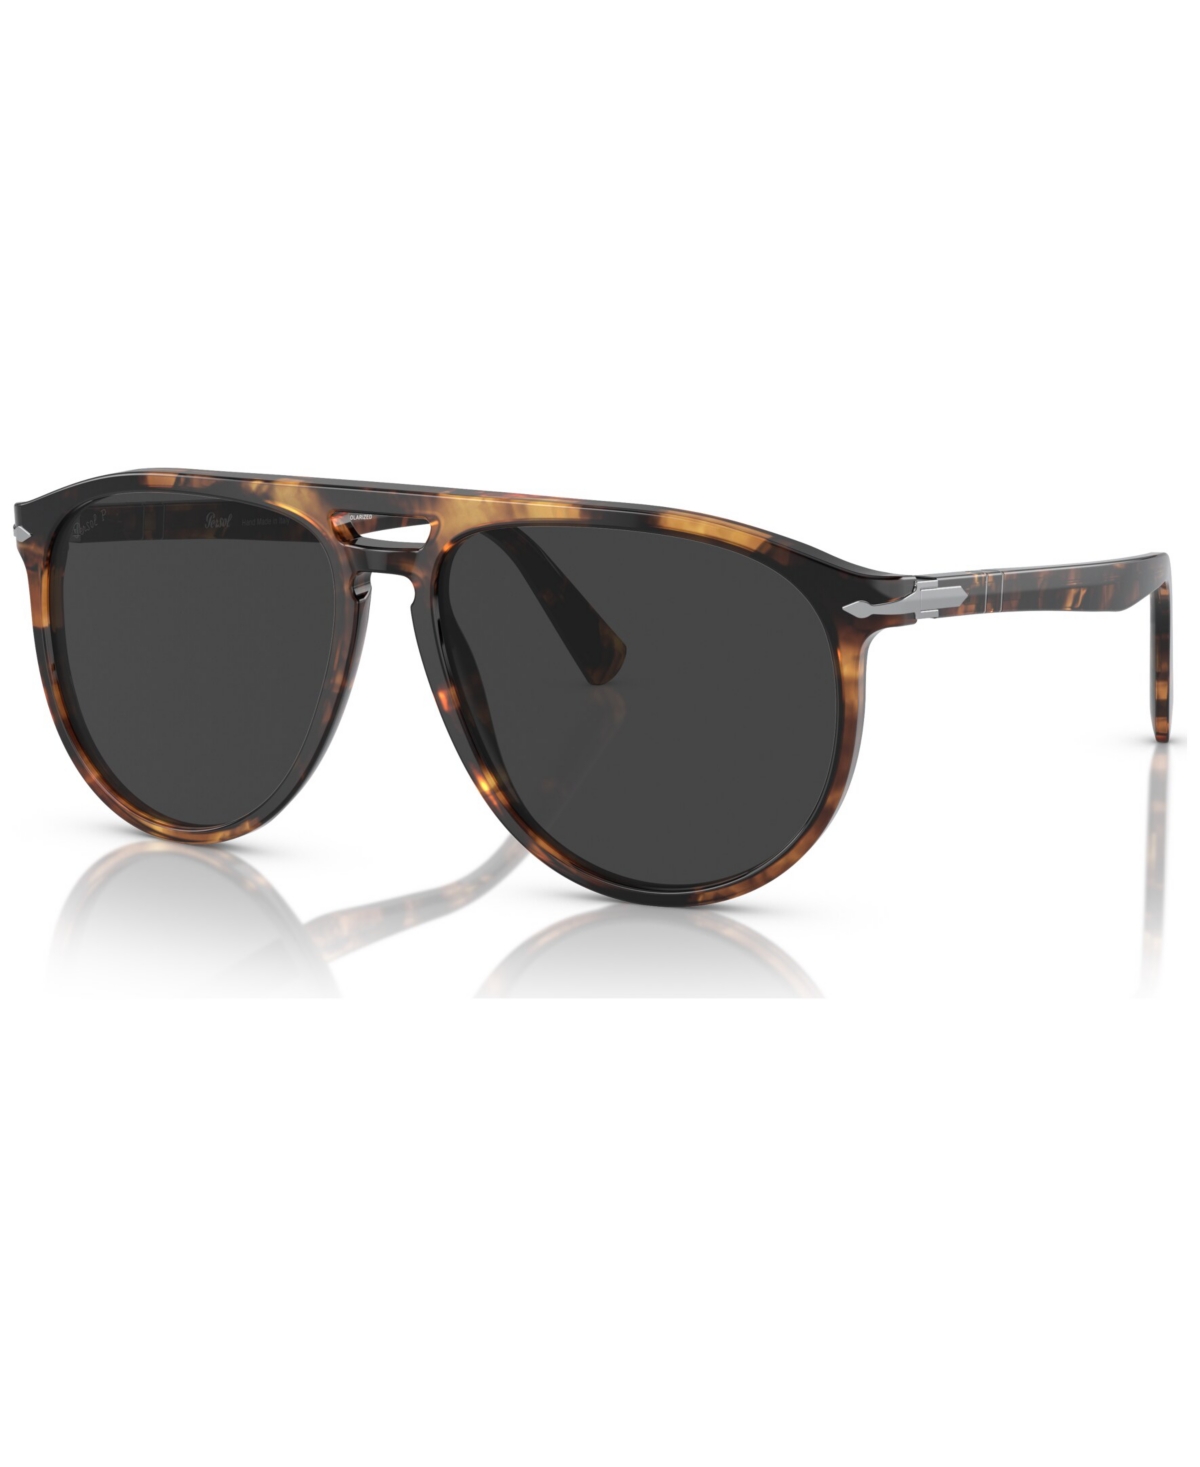 Persol Unisex Polarized Sunglasses, Po3311s In Honey Tortoise